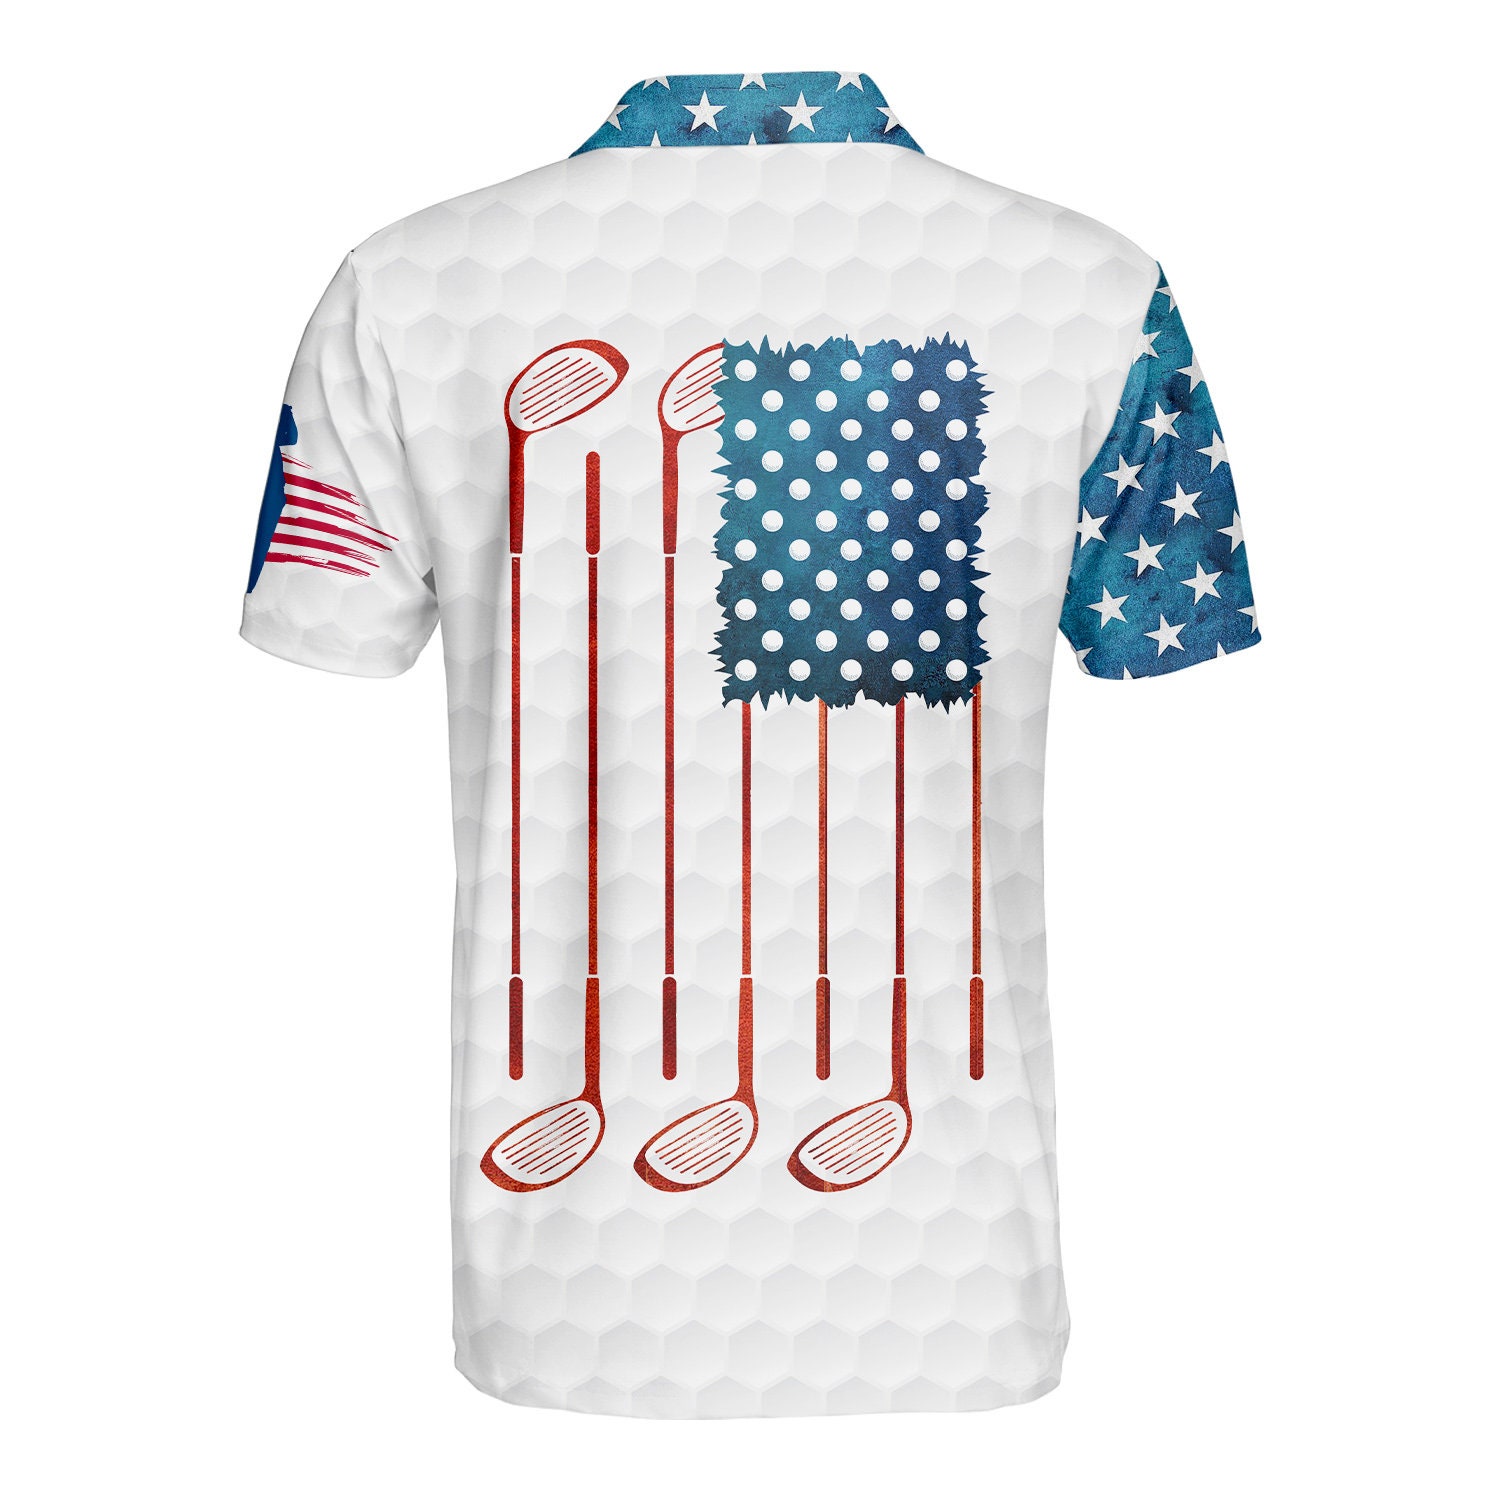 Bigfoot American Flag Golf Polo Shirts for Men, Bigfoot Sasquatch Golf Player